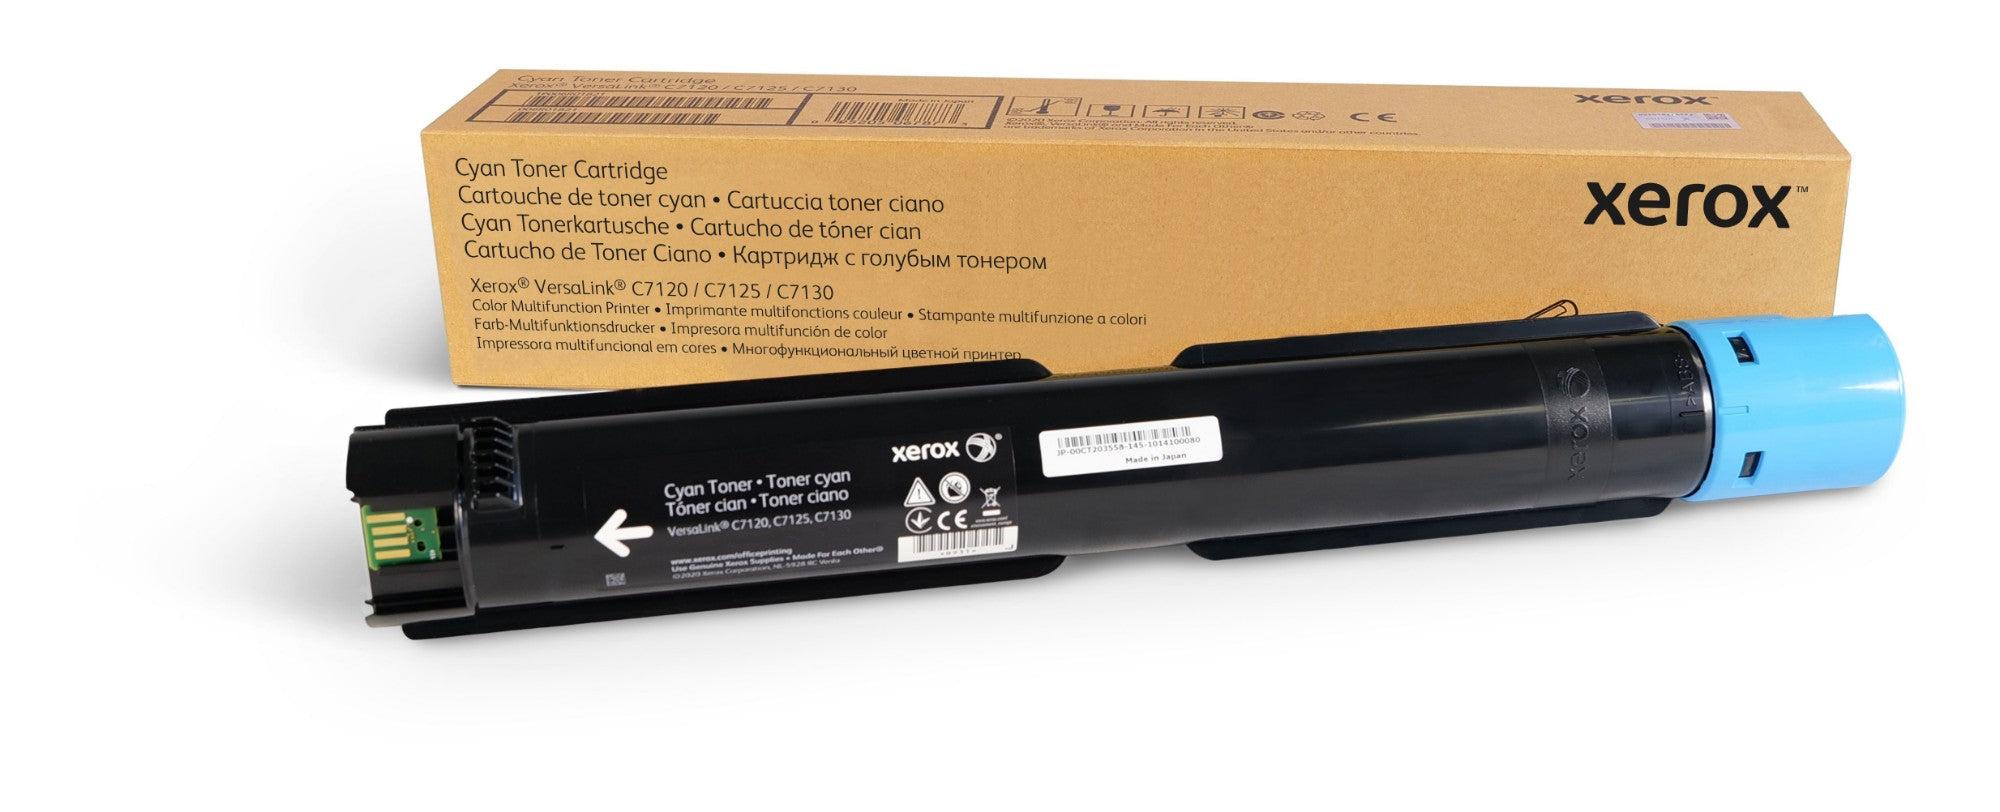 Xerox 006R01825 Toner-kit cyan, 18.5K pages ISO/IEC 19752 for Xerox VersaLink C 7100